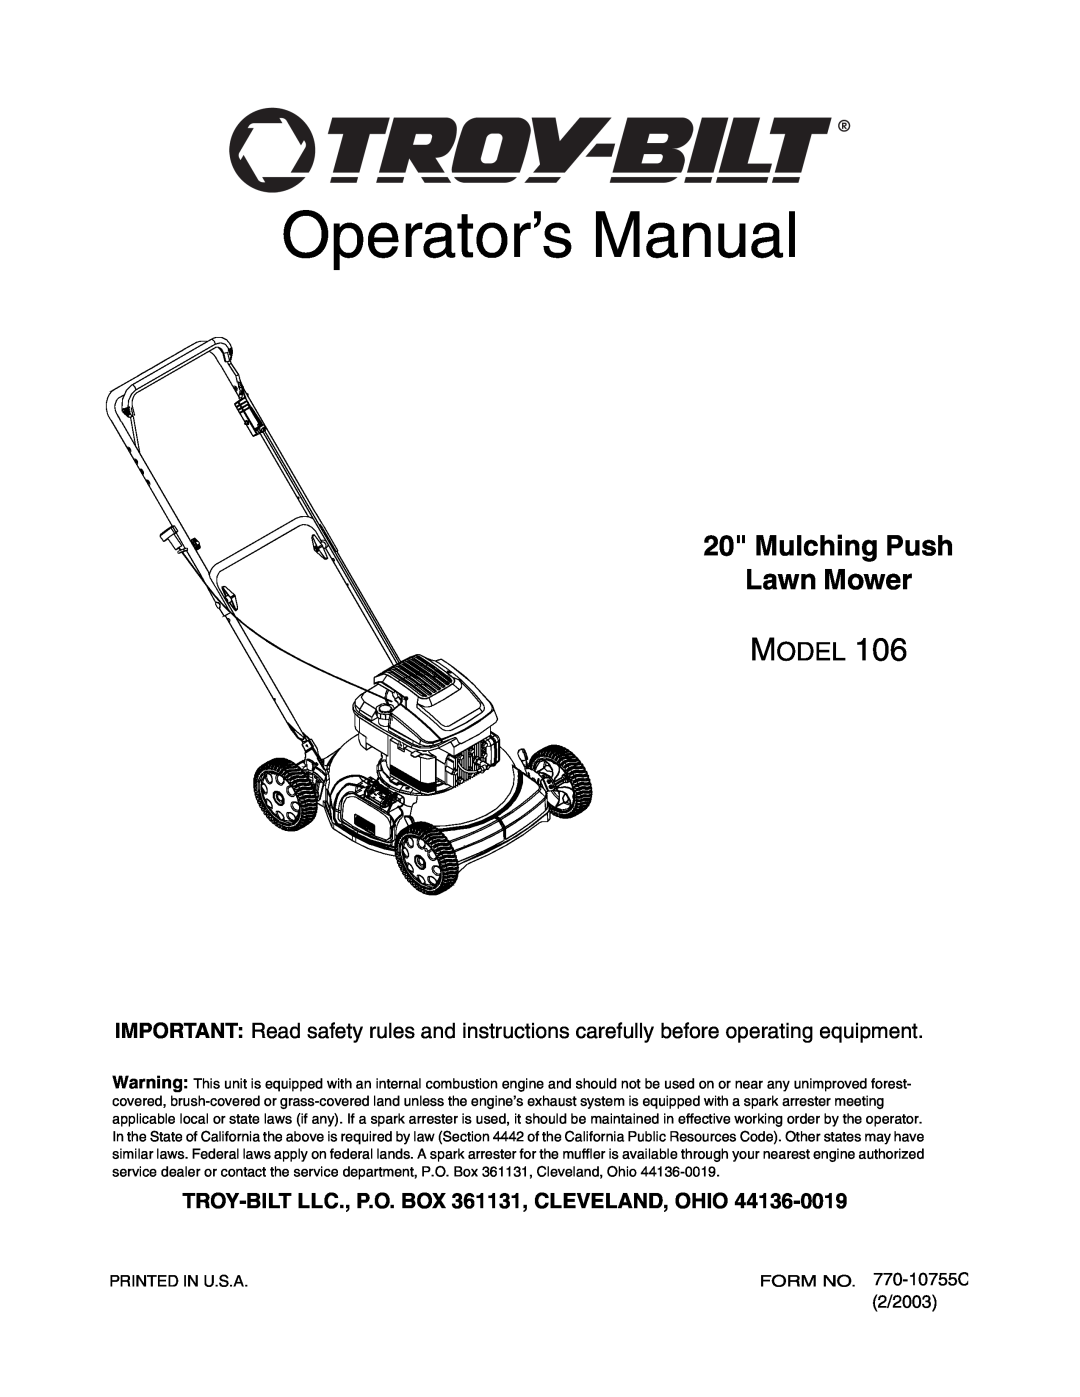 Troy-Bilt 106 manual TROY-BILT LLC., P.O. BOX 361131, CLEVELAND, OHIO, Operator’s Manual, Mulching Push Lawn Mower, Model 